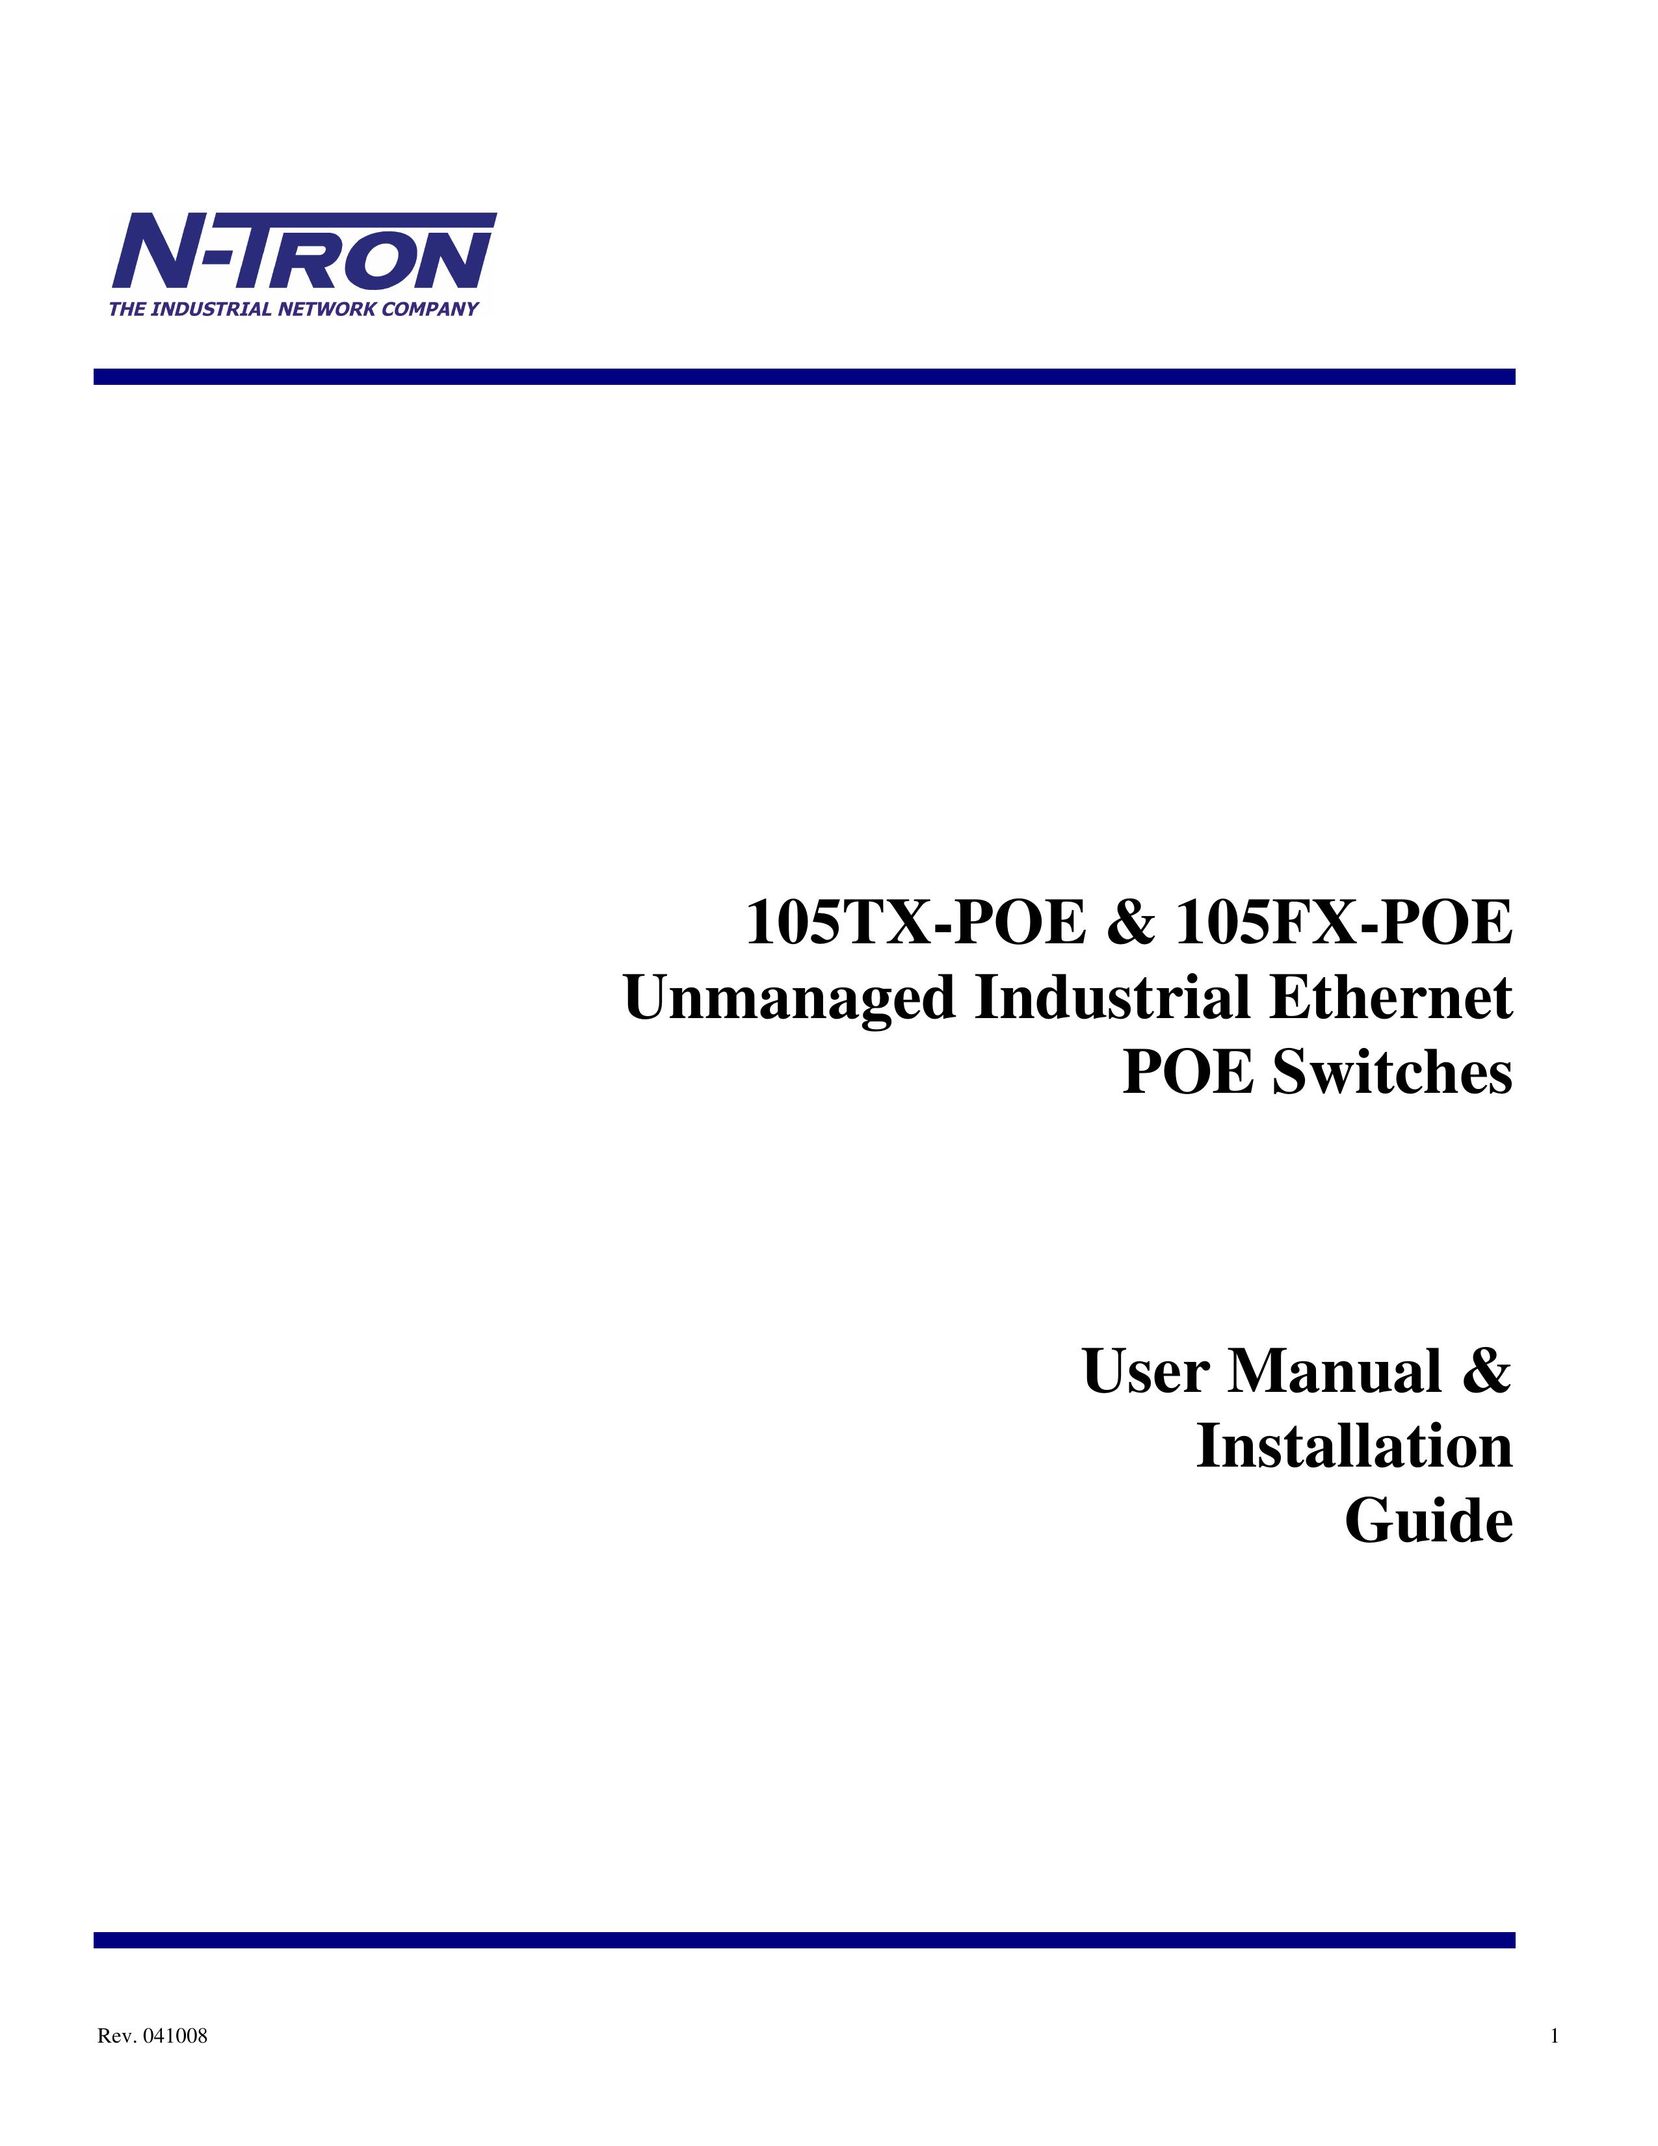 N-Tron 105FX-POE Switch User Manual